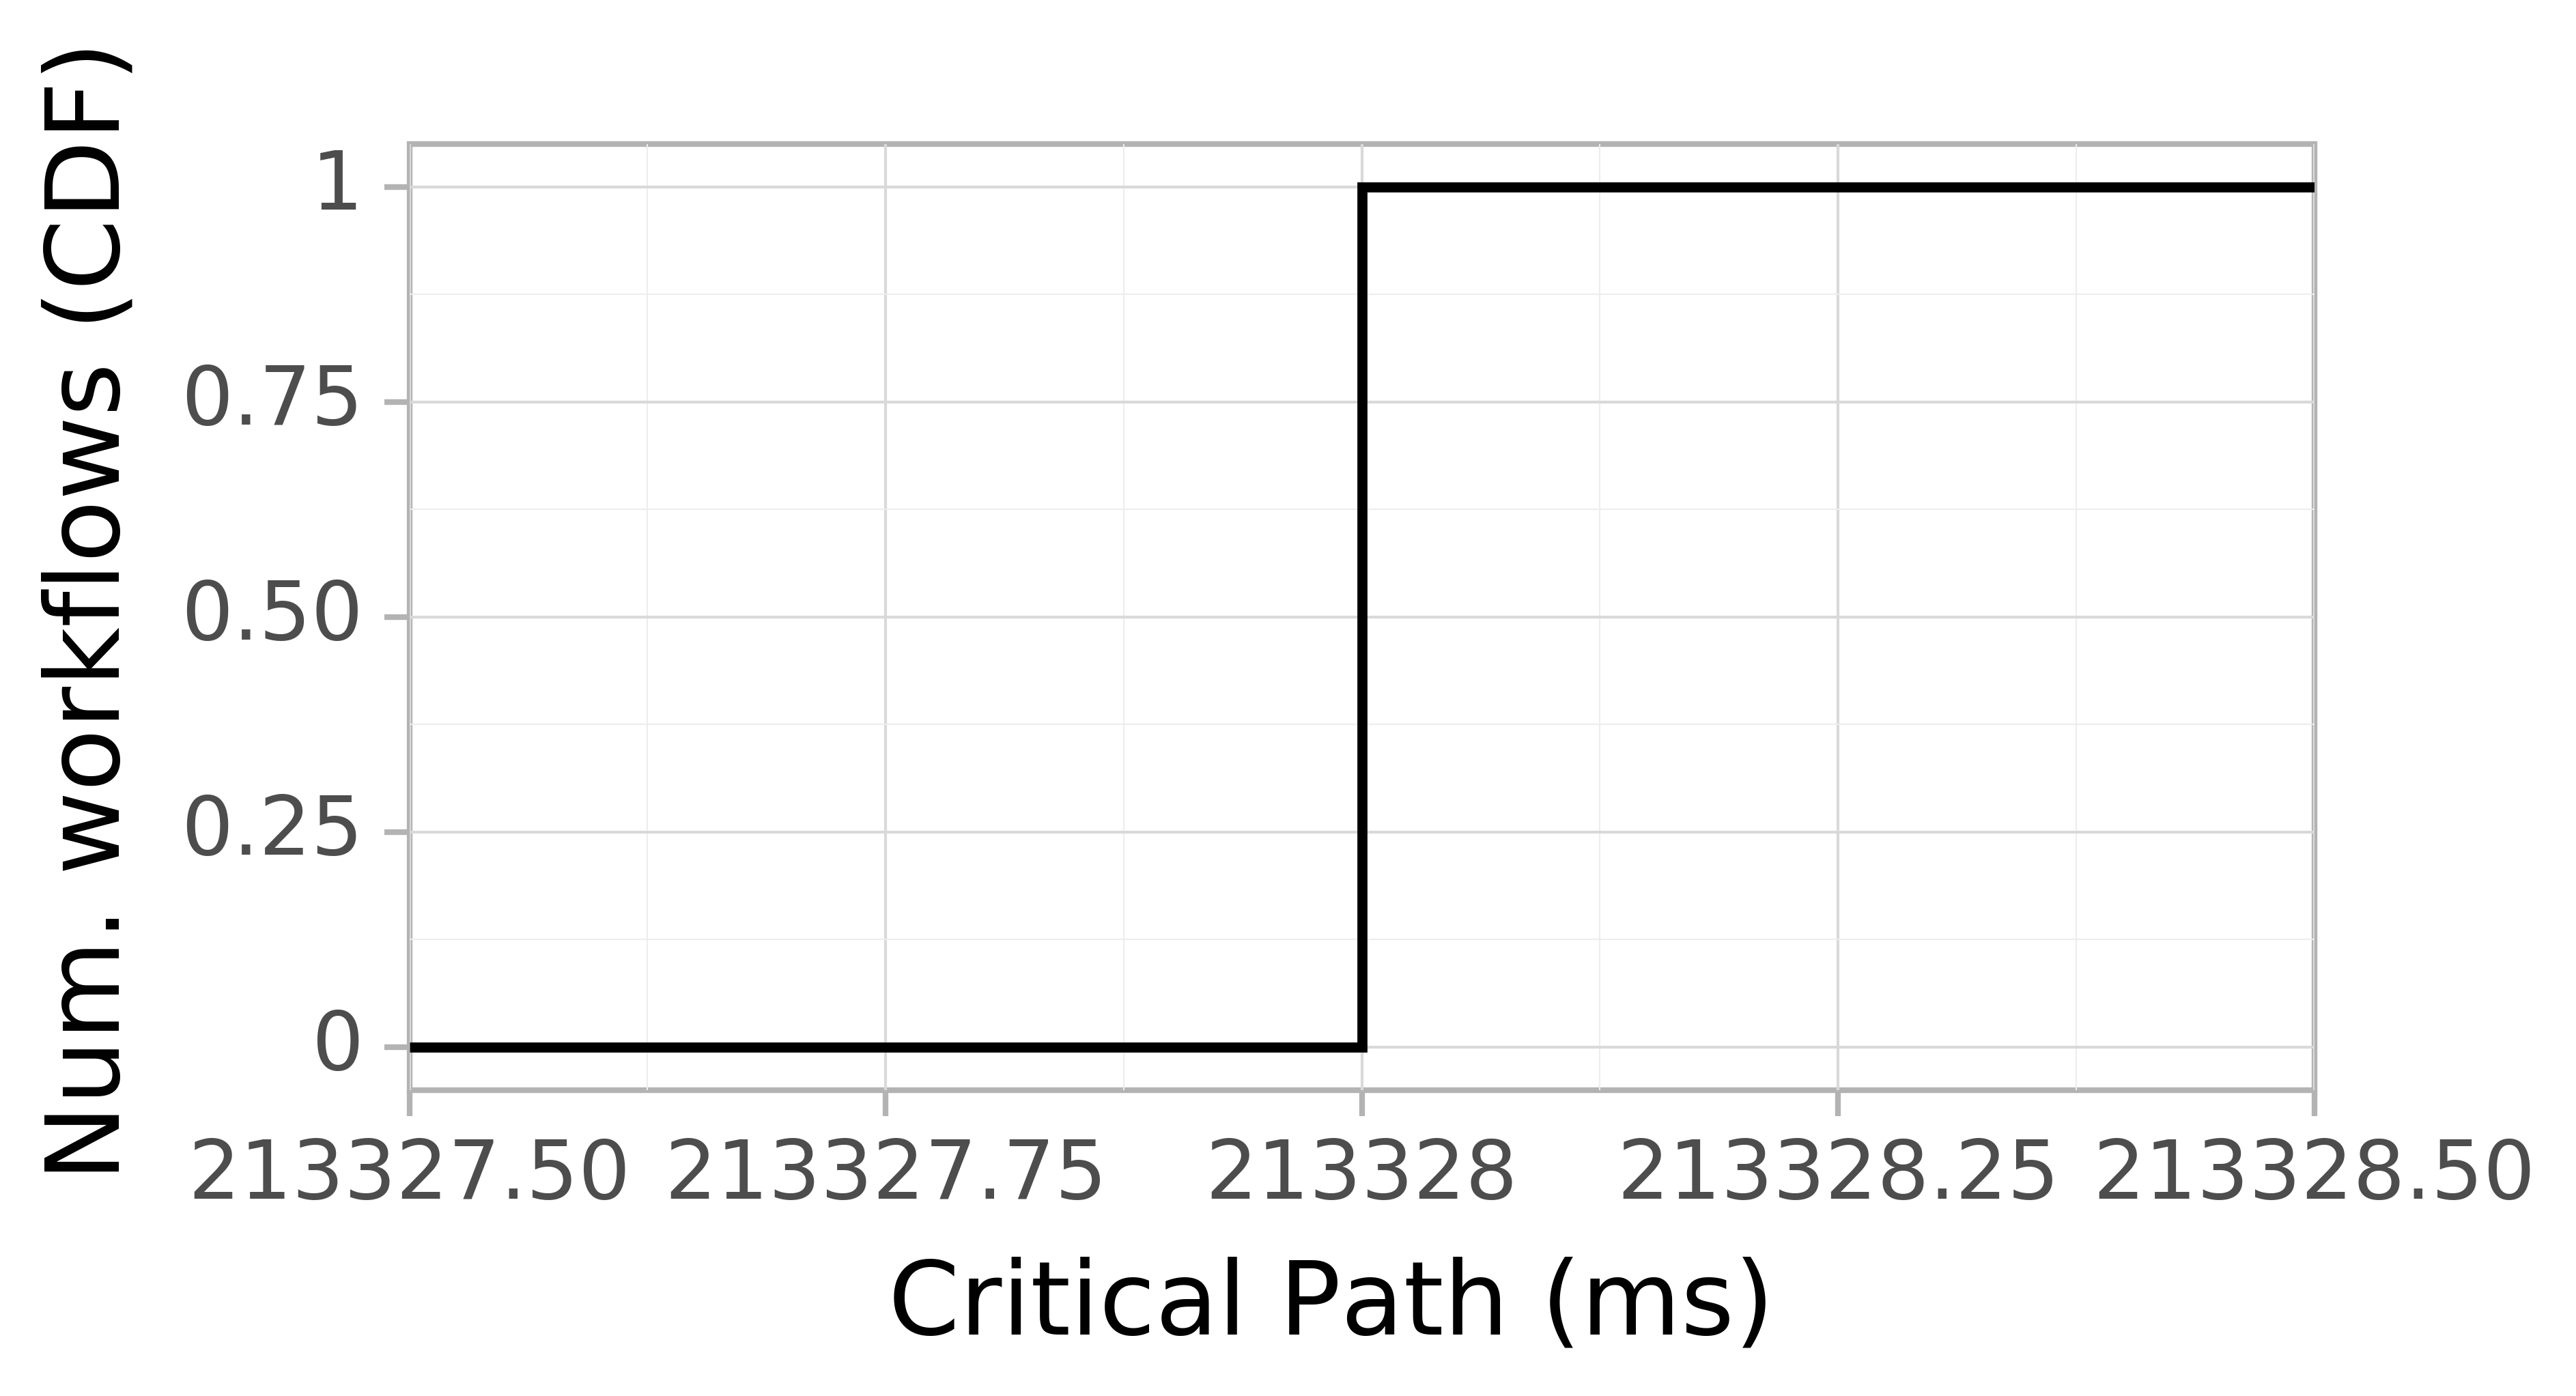 Job runtime CDF graph for the workflowhub_epigenomics_dataset-taq_chameleon-cloud_schema-0-2_epigenomics-taq-100000-cc-run002 trace.